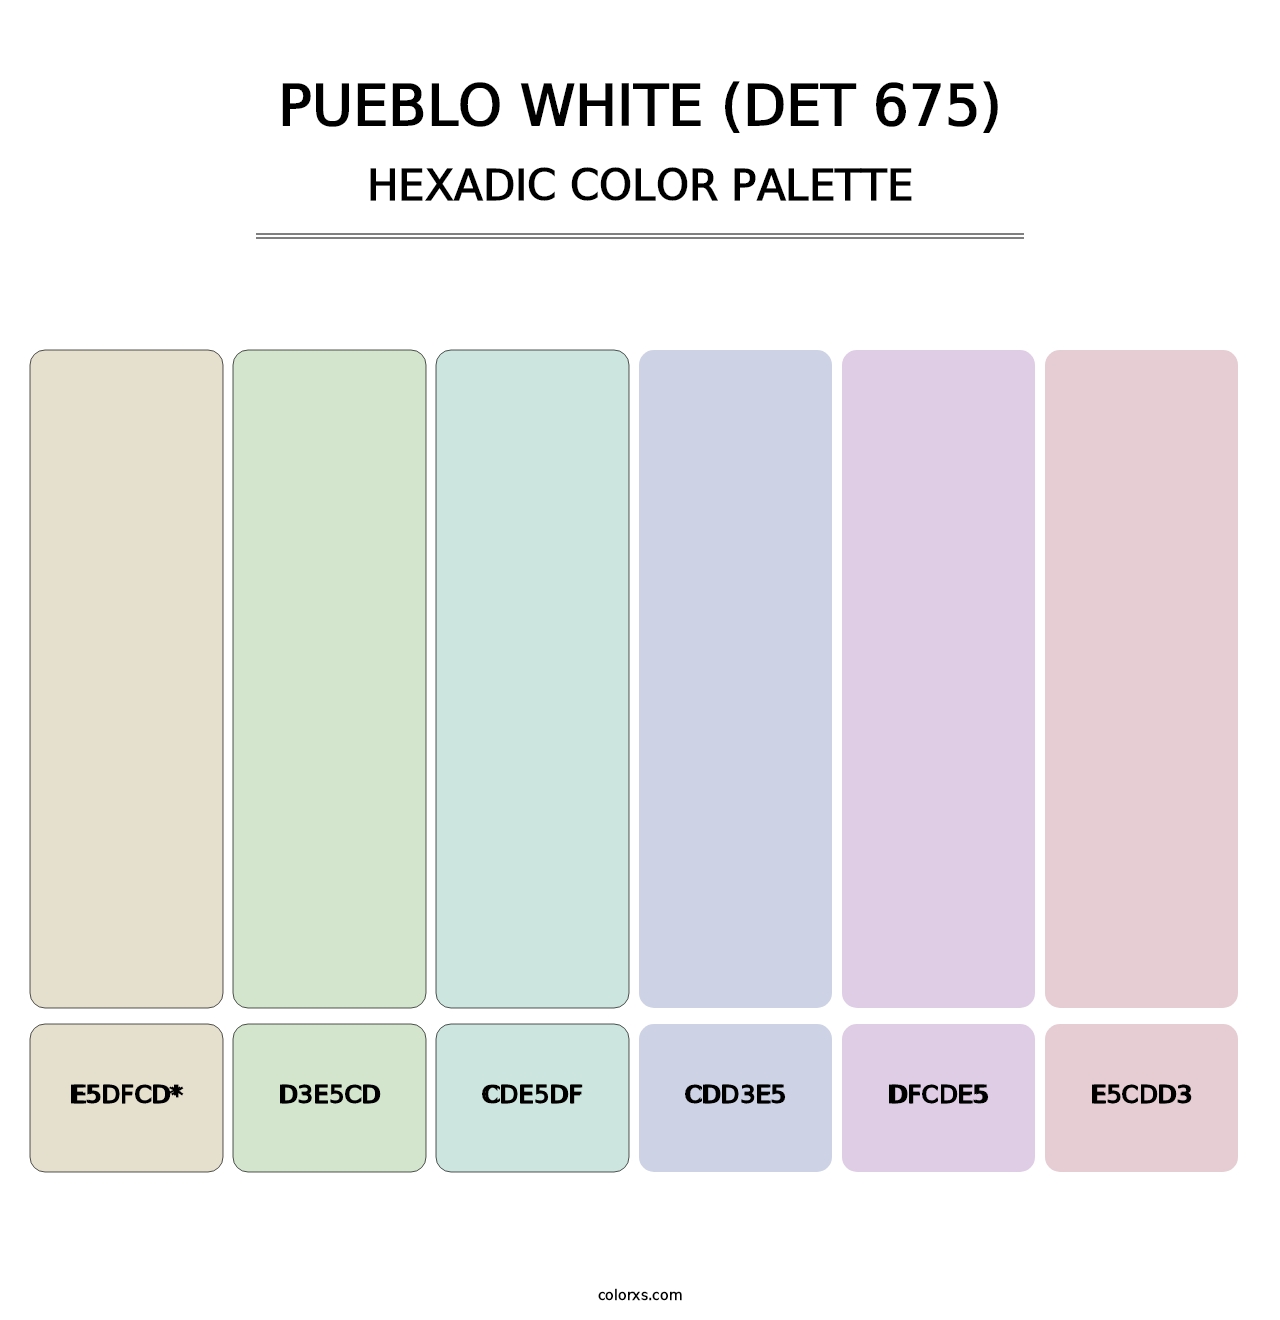 Pueblo White (DET 675) - Hexadic Color Palette